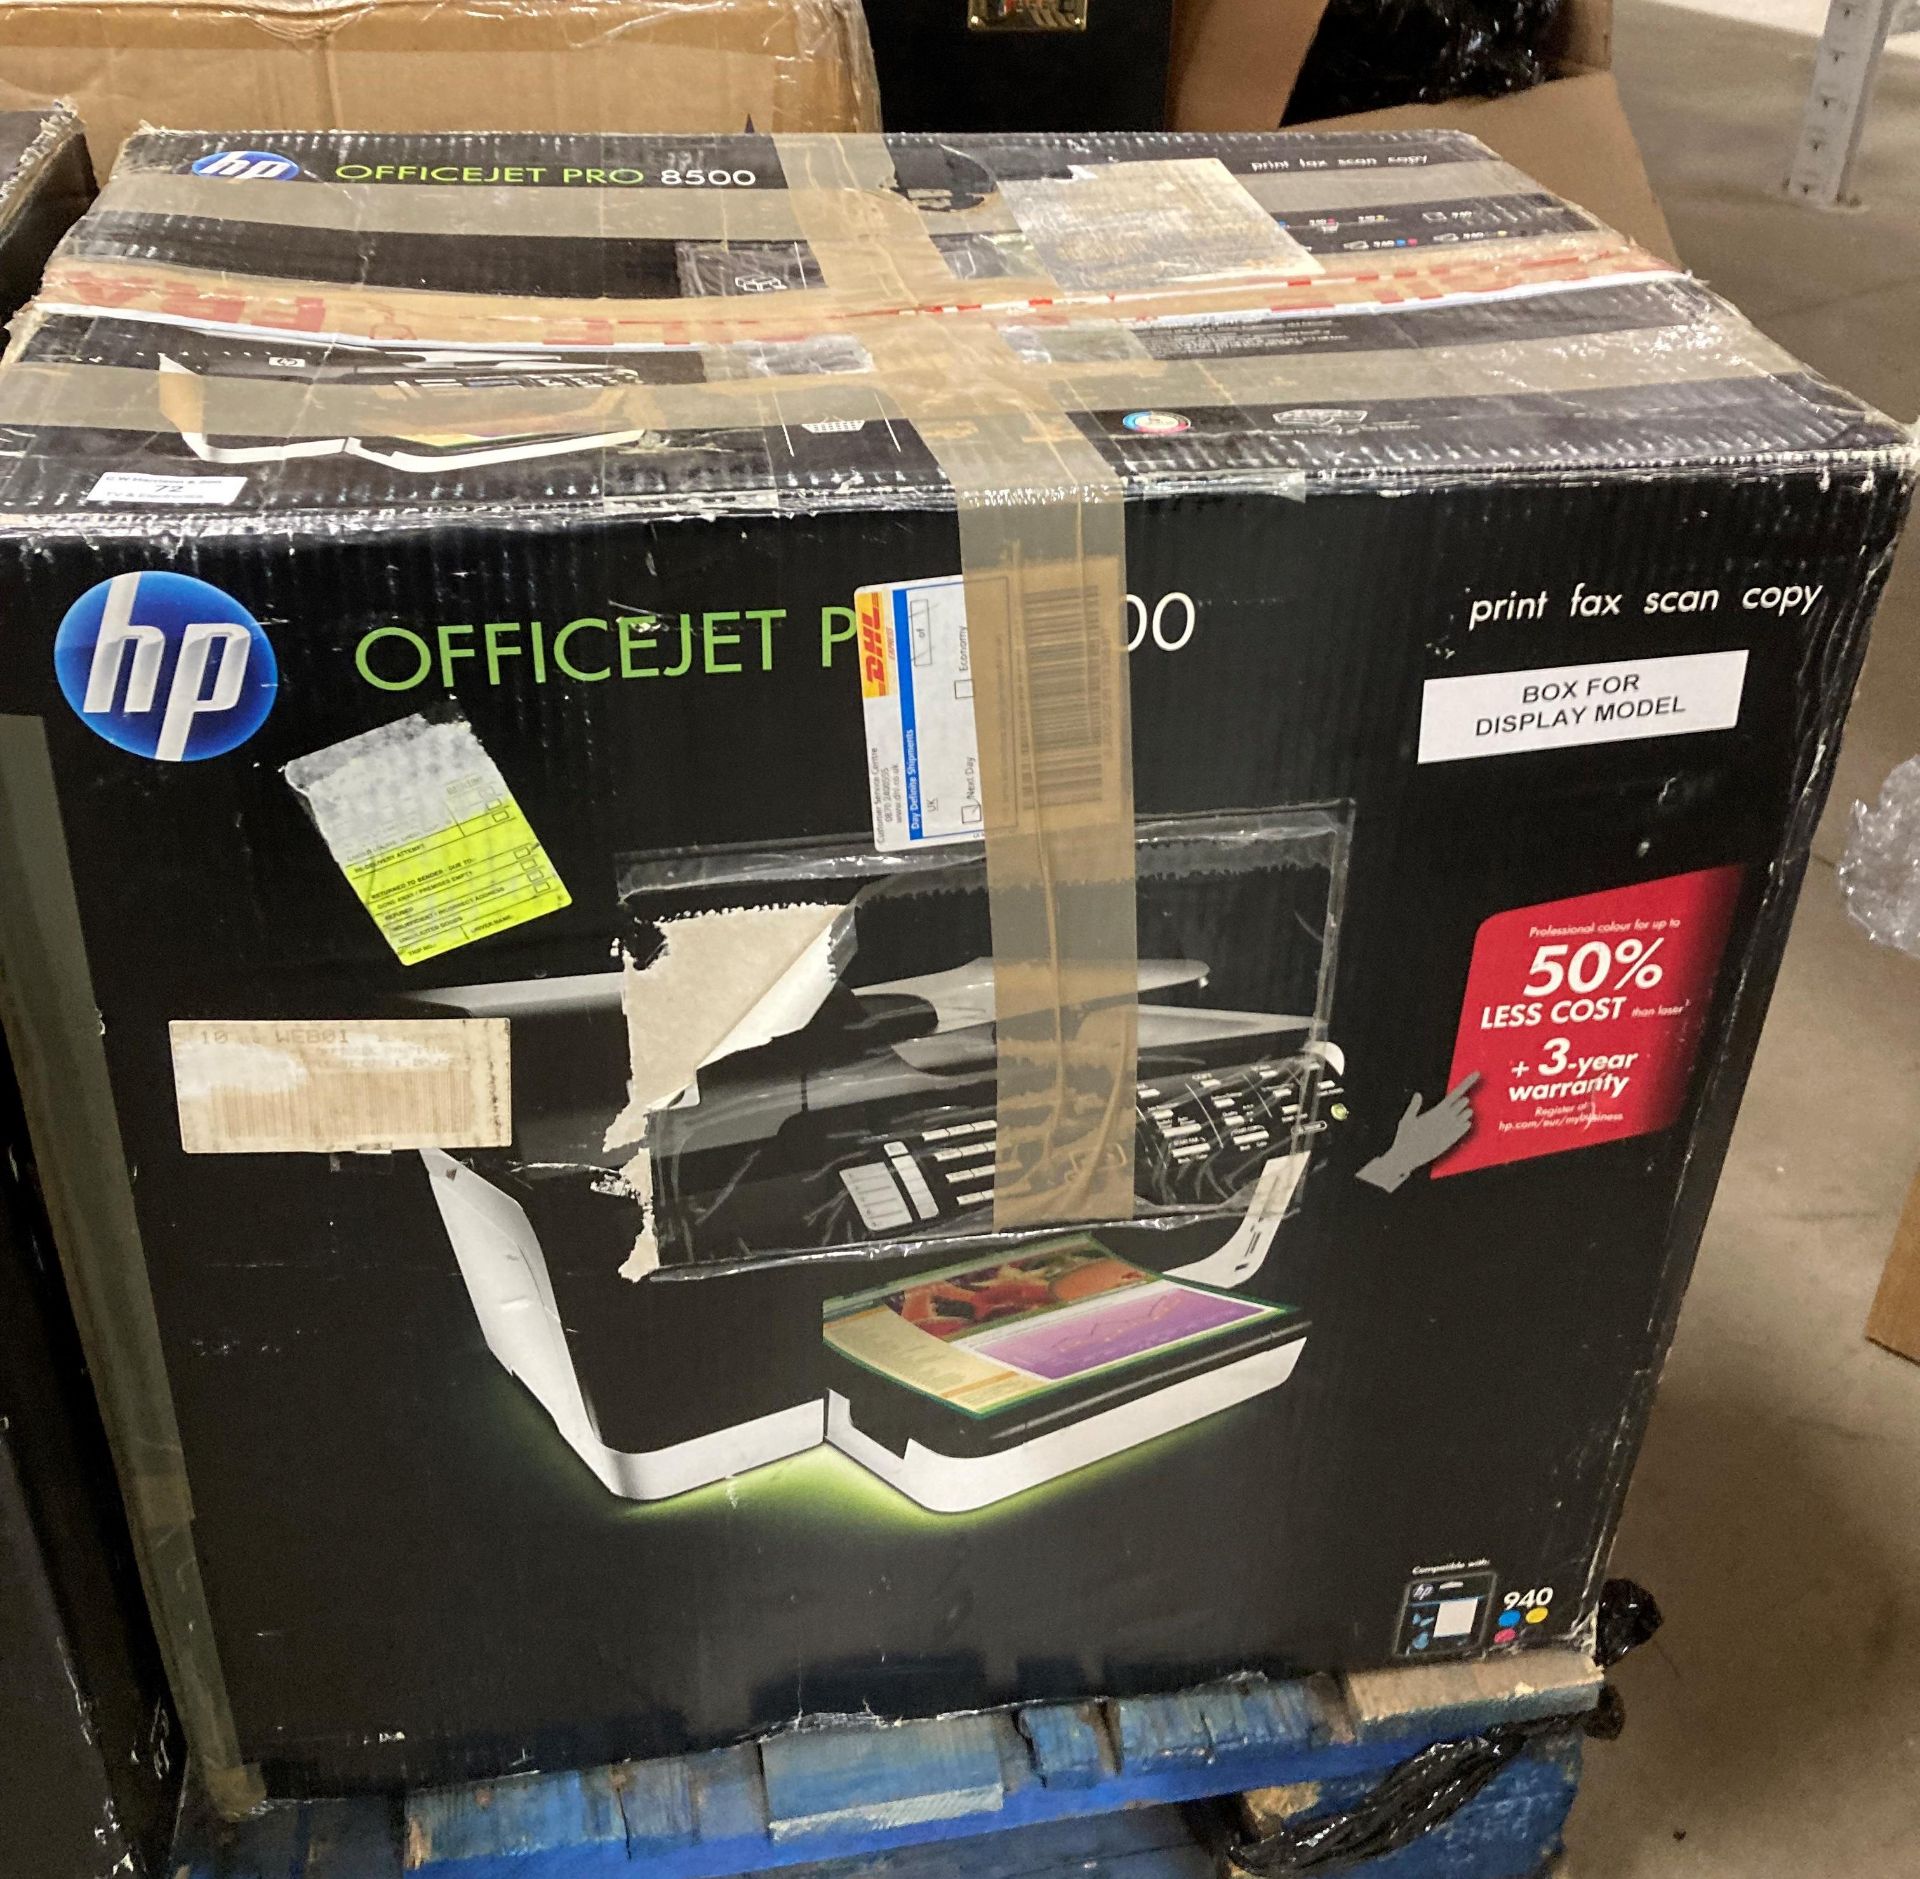 HP OfficeJet 8500 all-in-one printer scanner fax copier (saleroom location: J13) Further